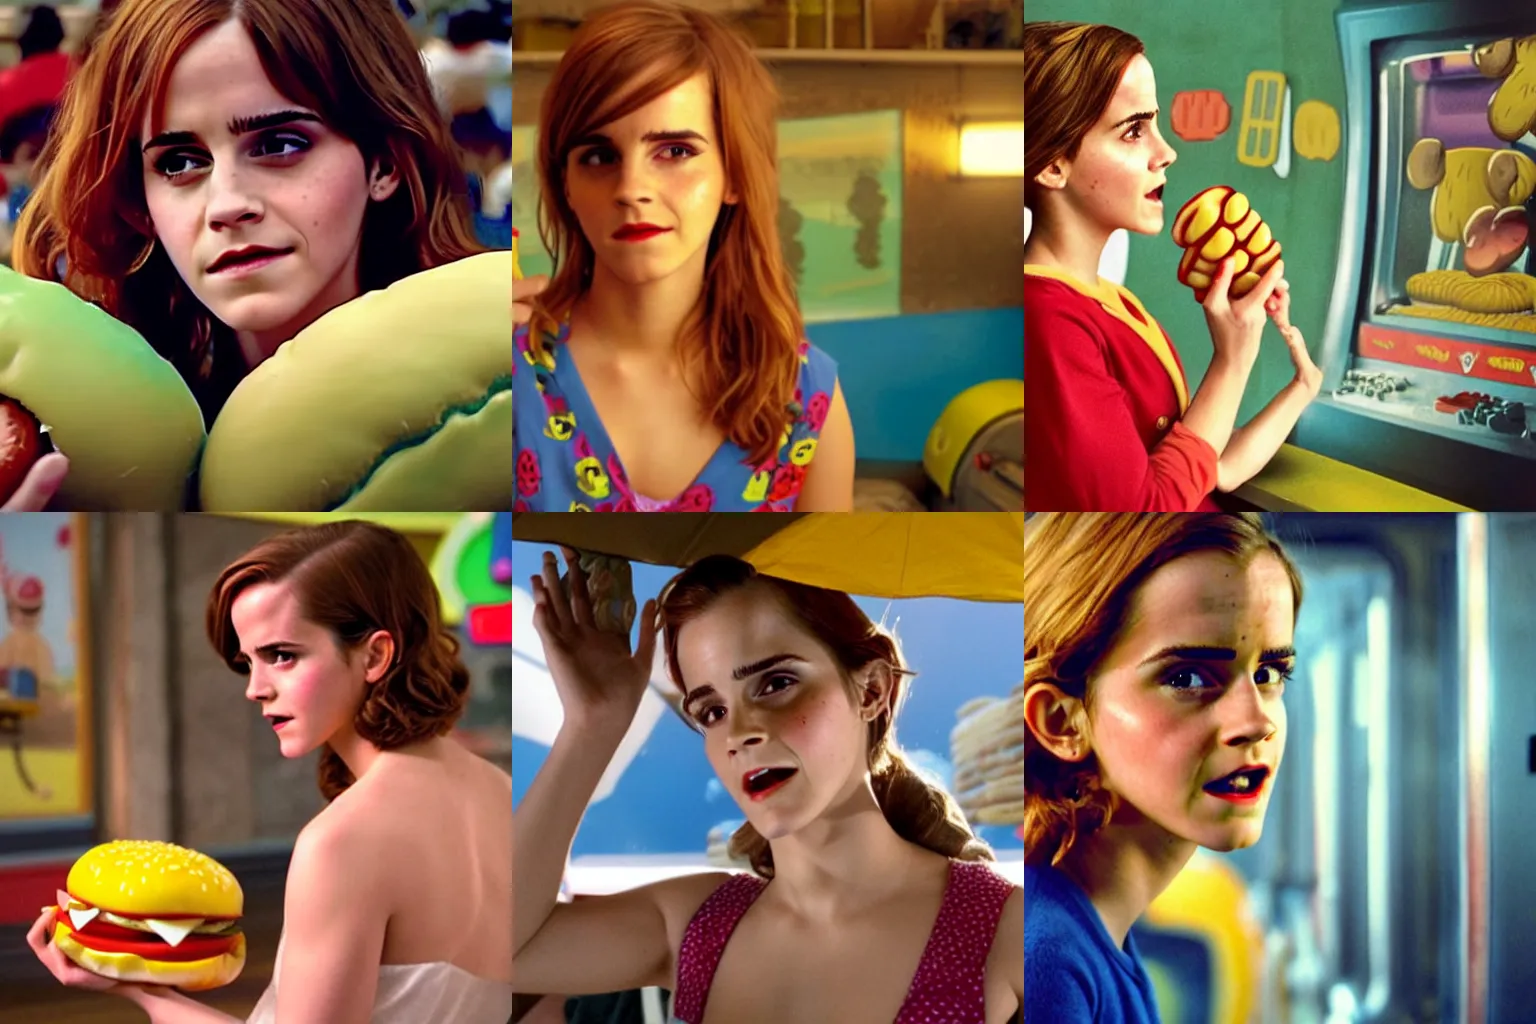 Prompt: Color movie still of Emma Watson in 'Hot Dog monster vs Hamburger monster' by Greg Hildebrandt